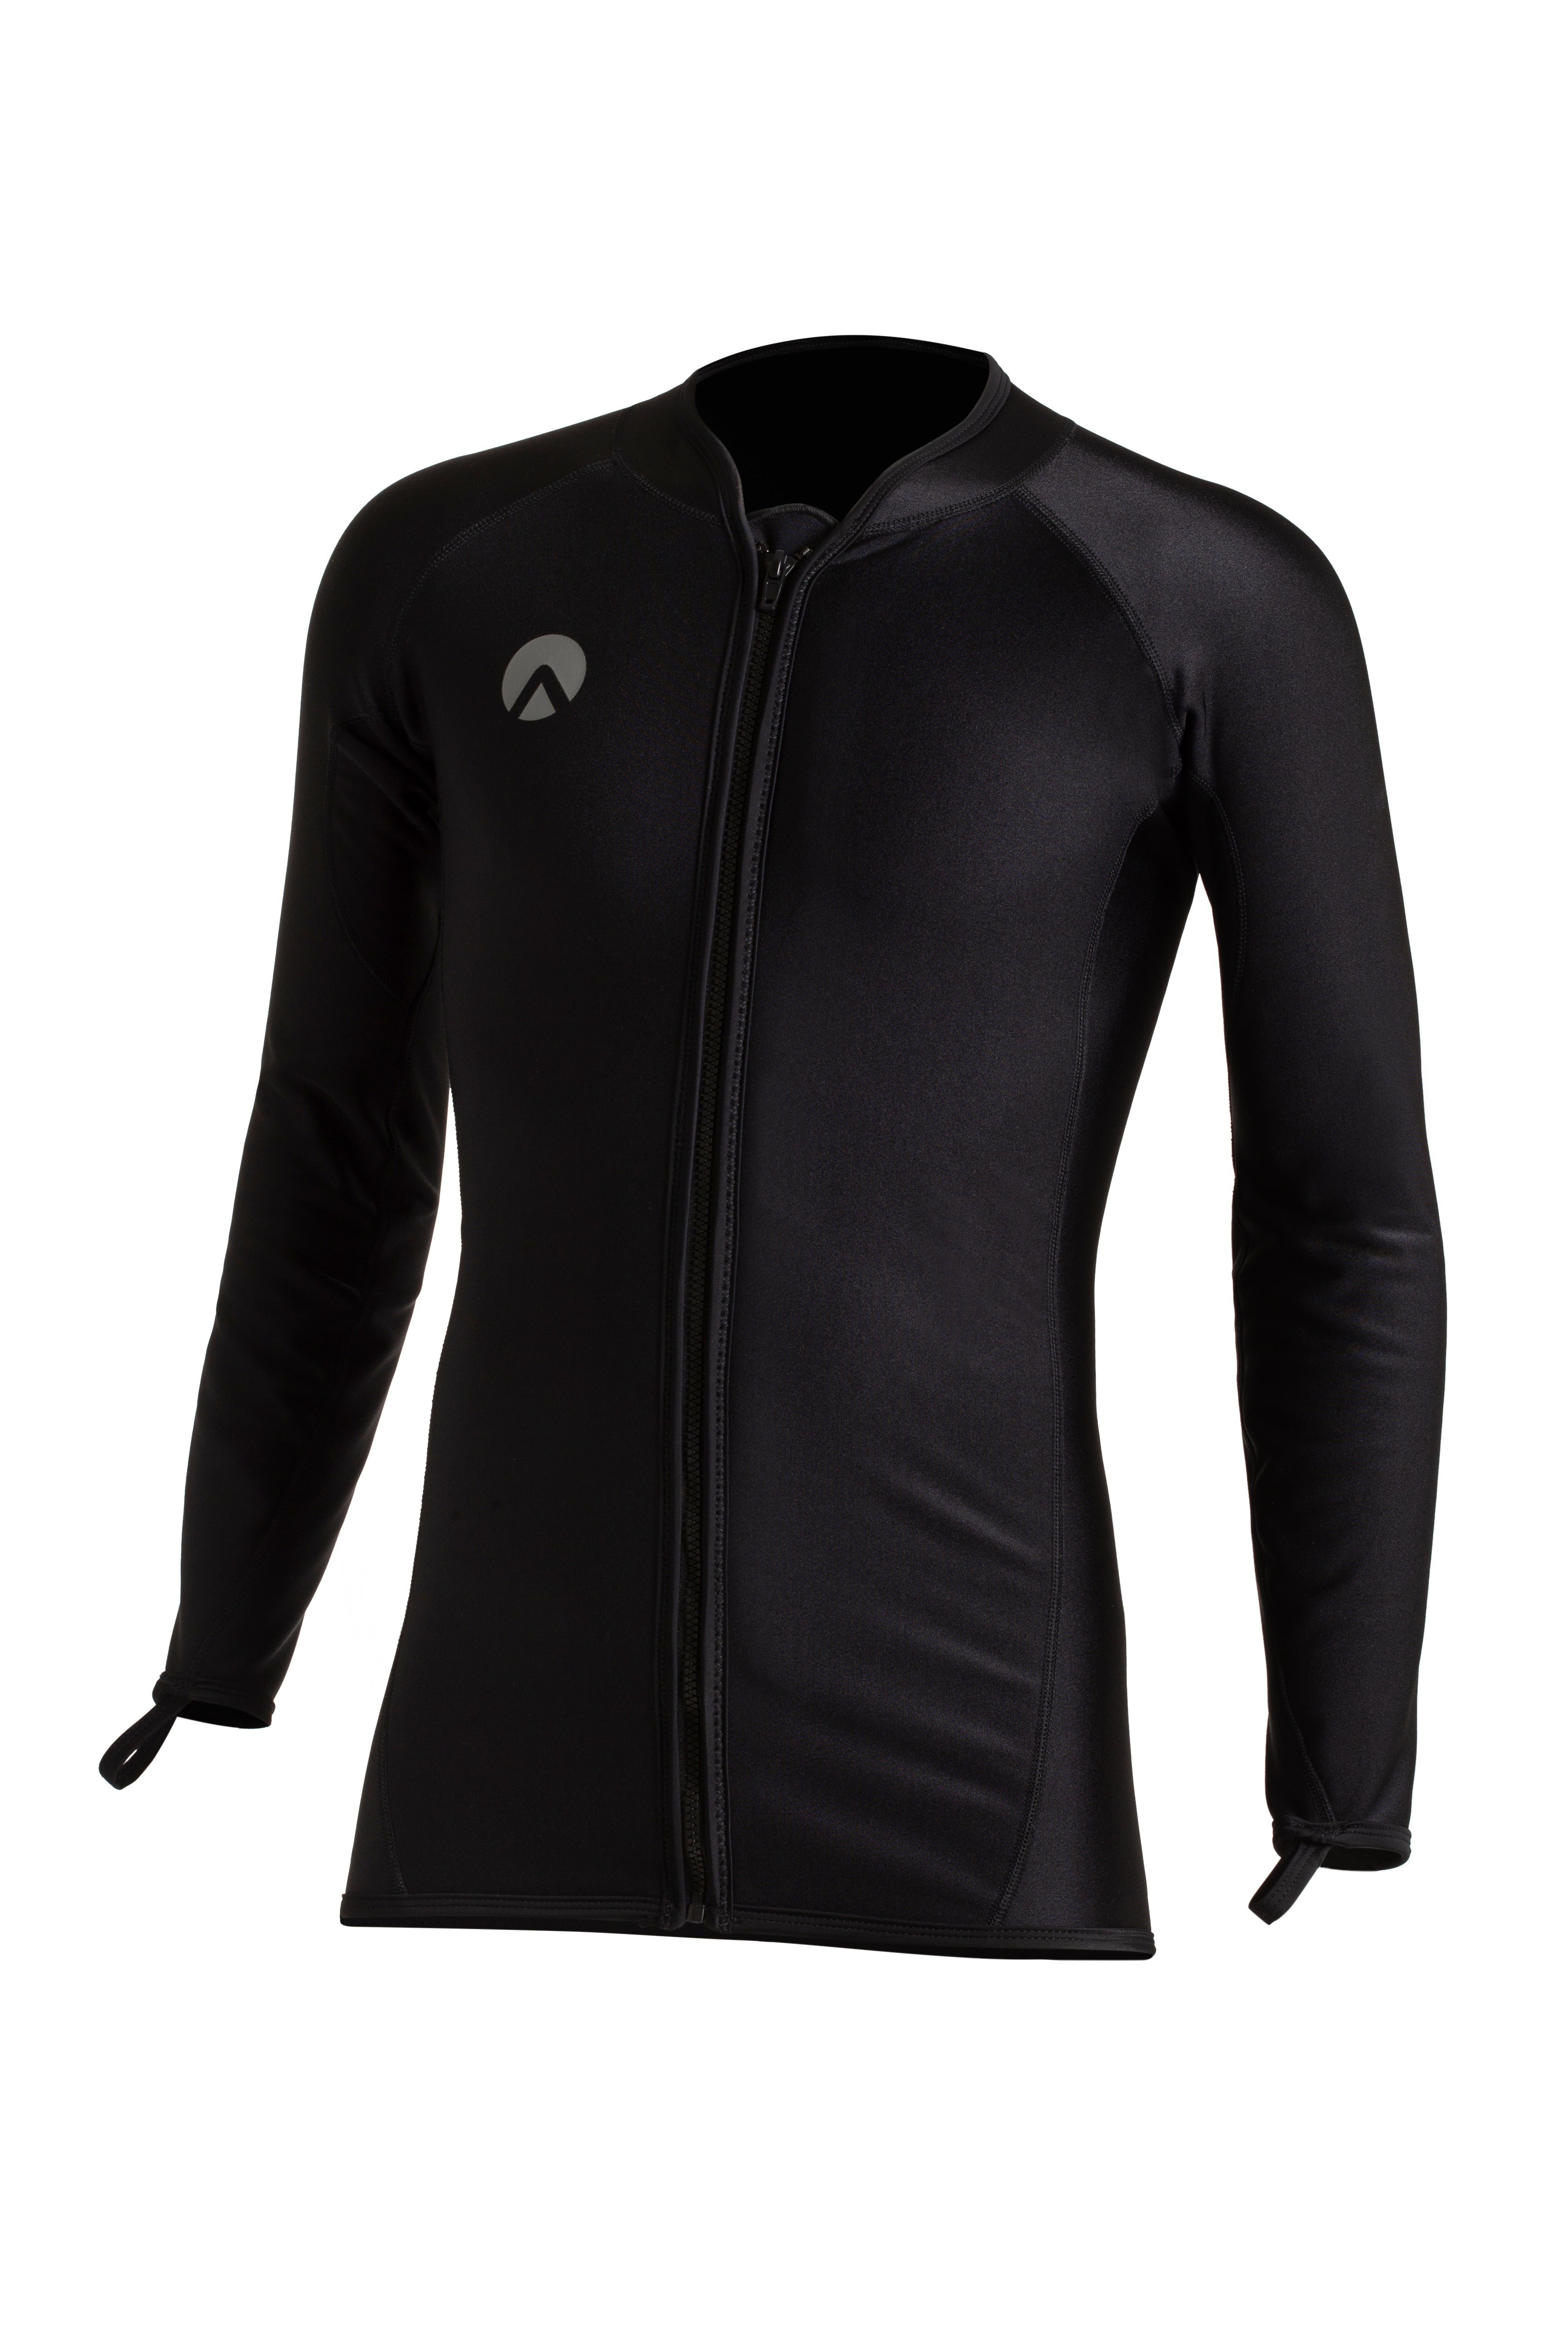 Chillproof Top Long Sleeves With Front Zip - Men's-Top-wetsuit, diver, sharkskin, snorkeling gear, watersports equipment, diving fins, snorkeling mask, ocean reef, Garmin G1